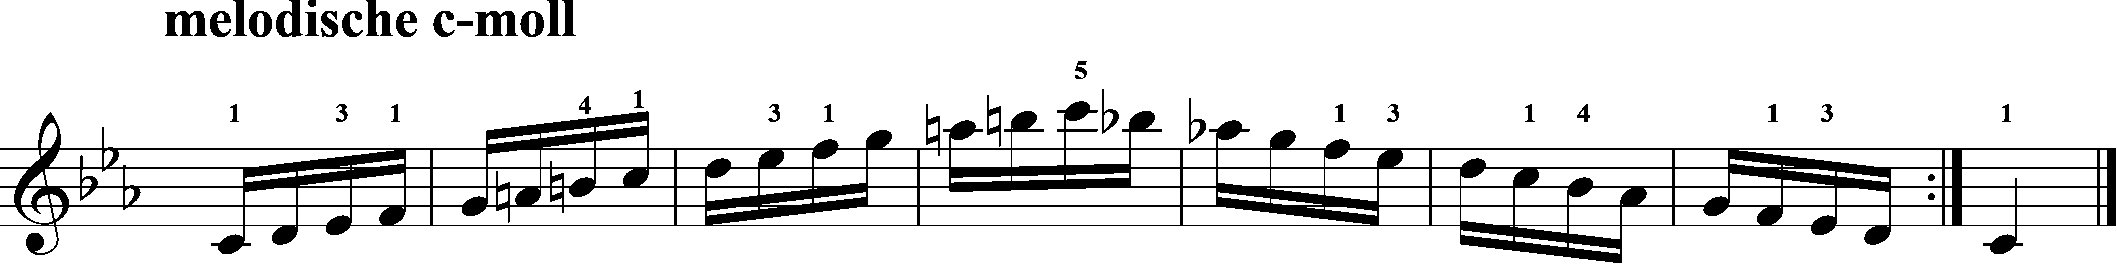 akkordeon, melodische c-moll, skalen, hanon